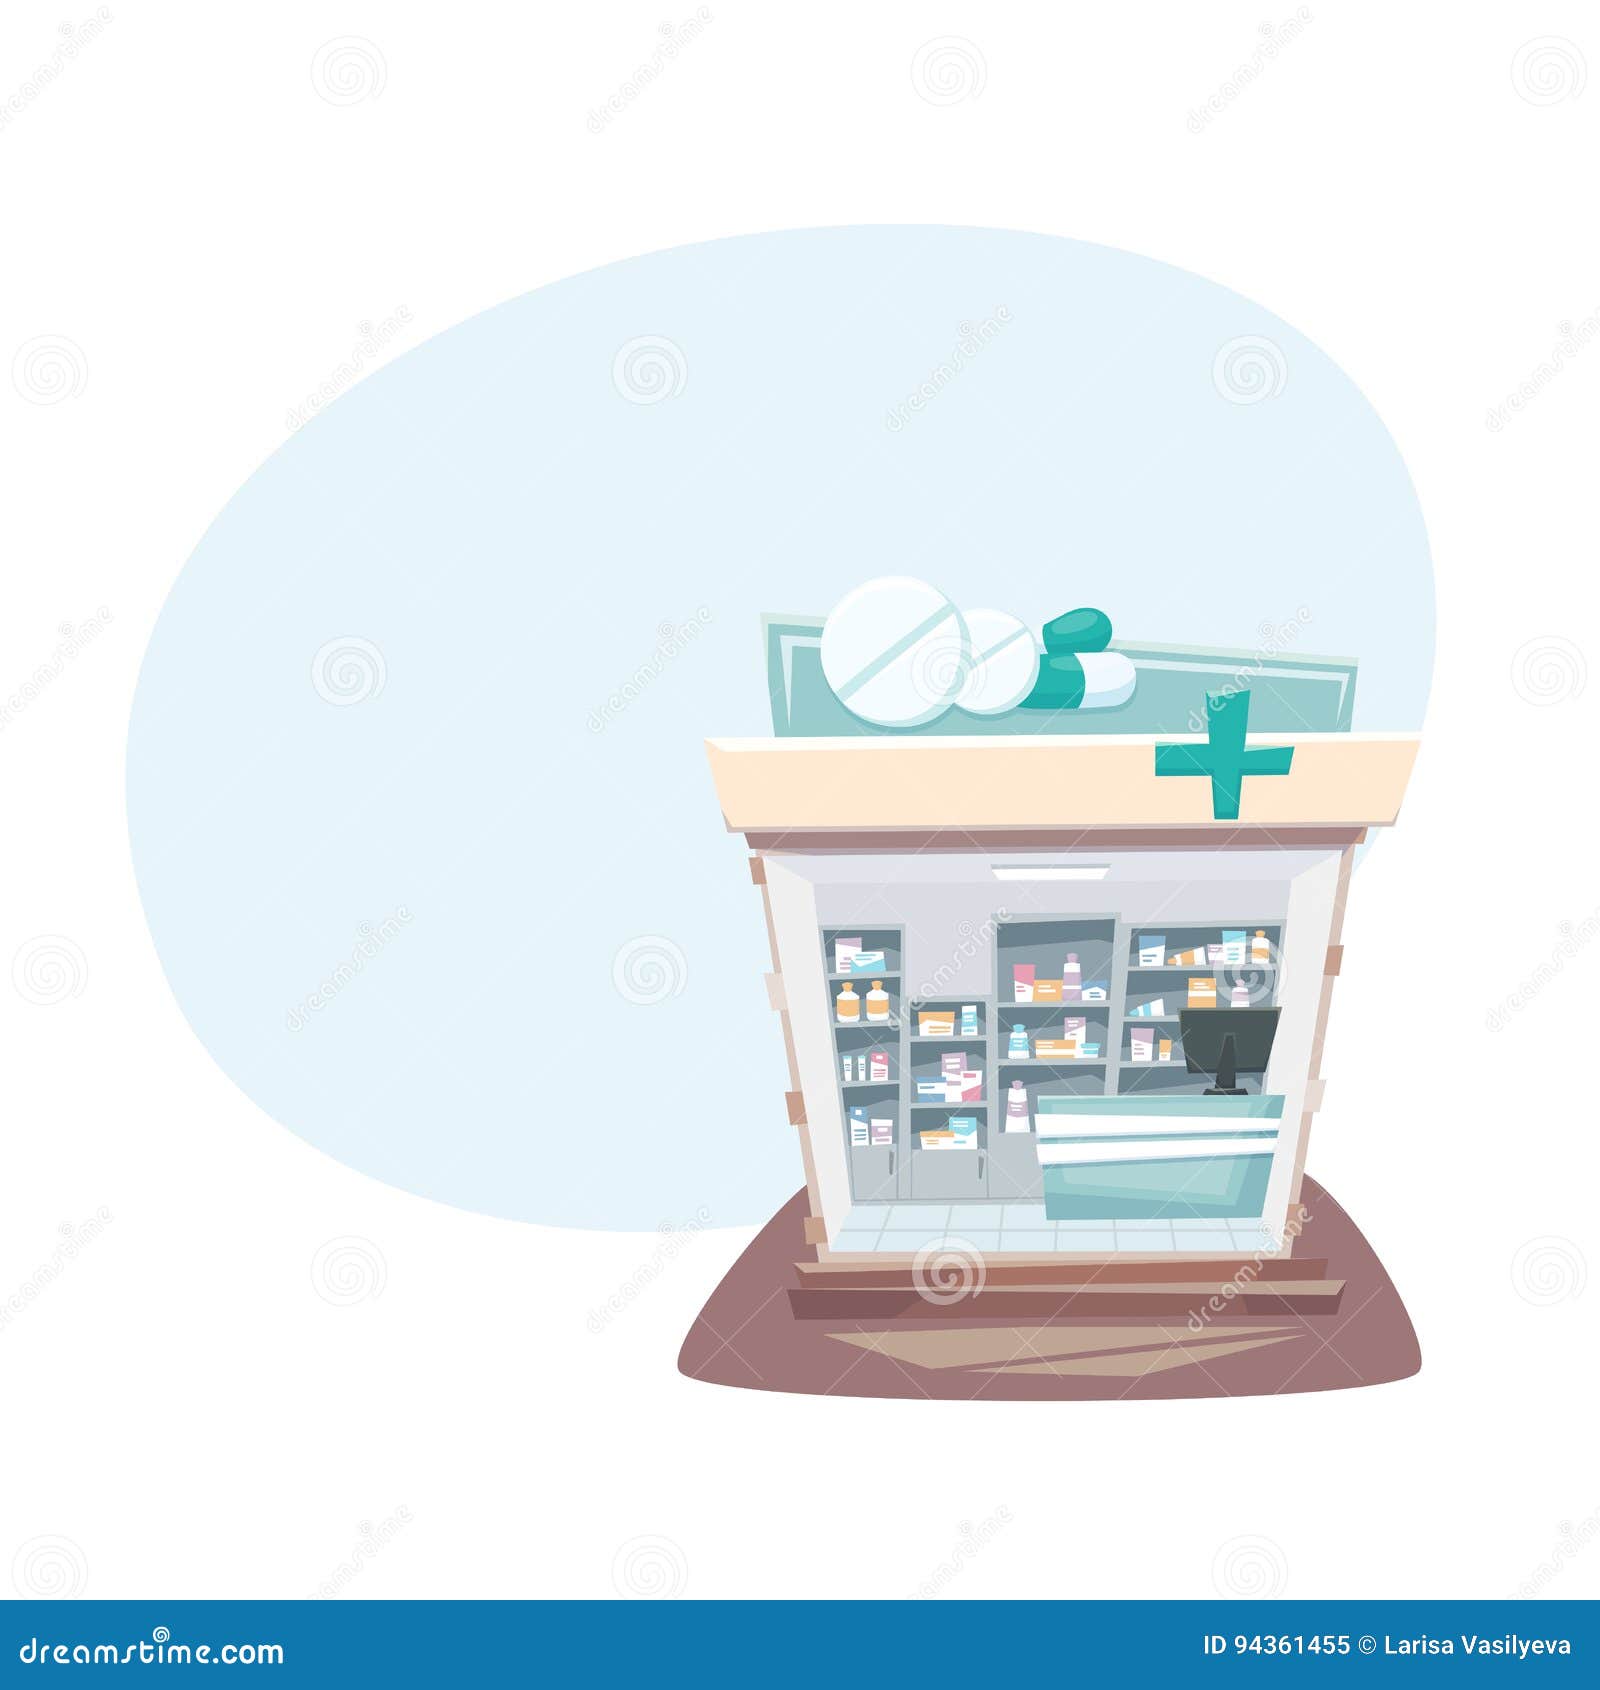 Pharmacy store interior stock vector. Illustration of retail - 94361455